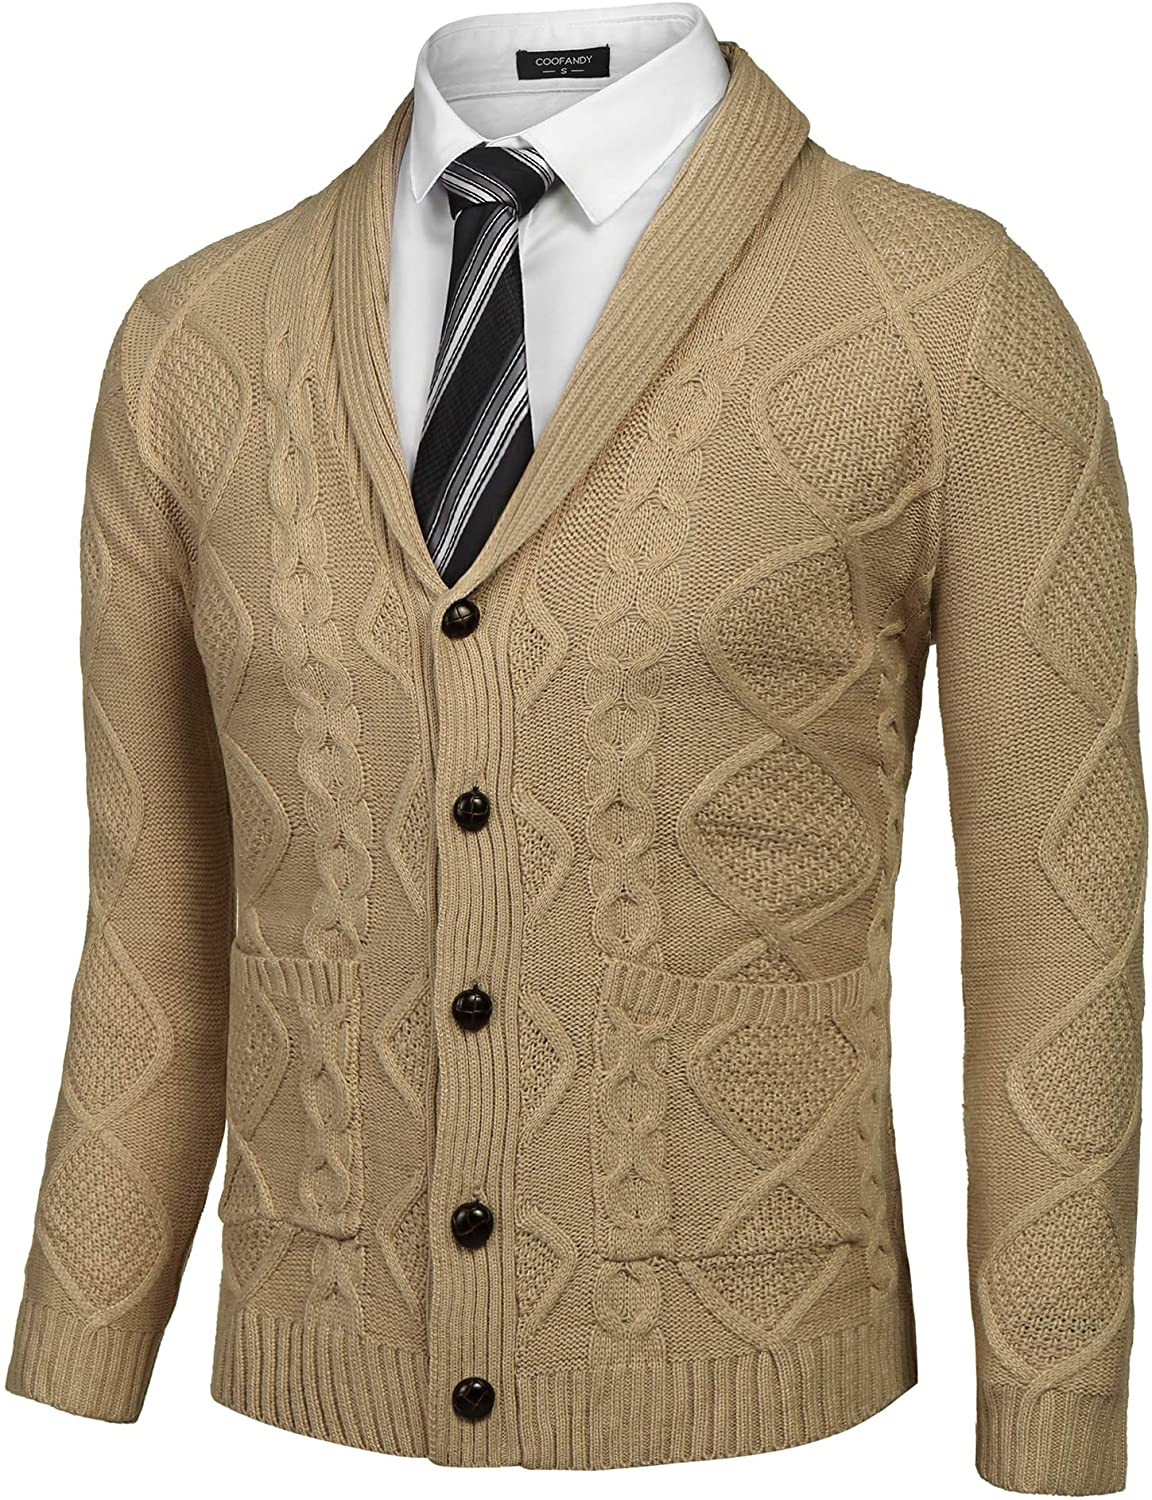 COOFANDY Men's Shawl Collar Cardigan Sweater Slim Fit Merish Aran ...